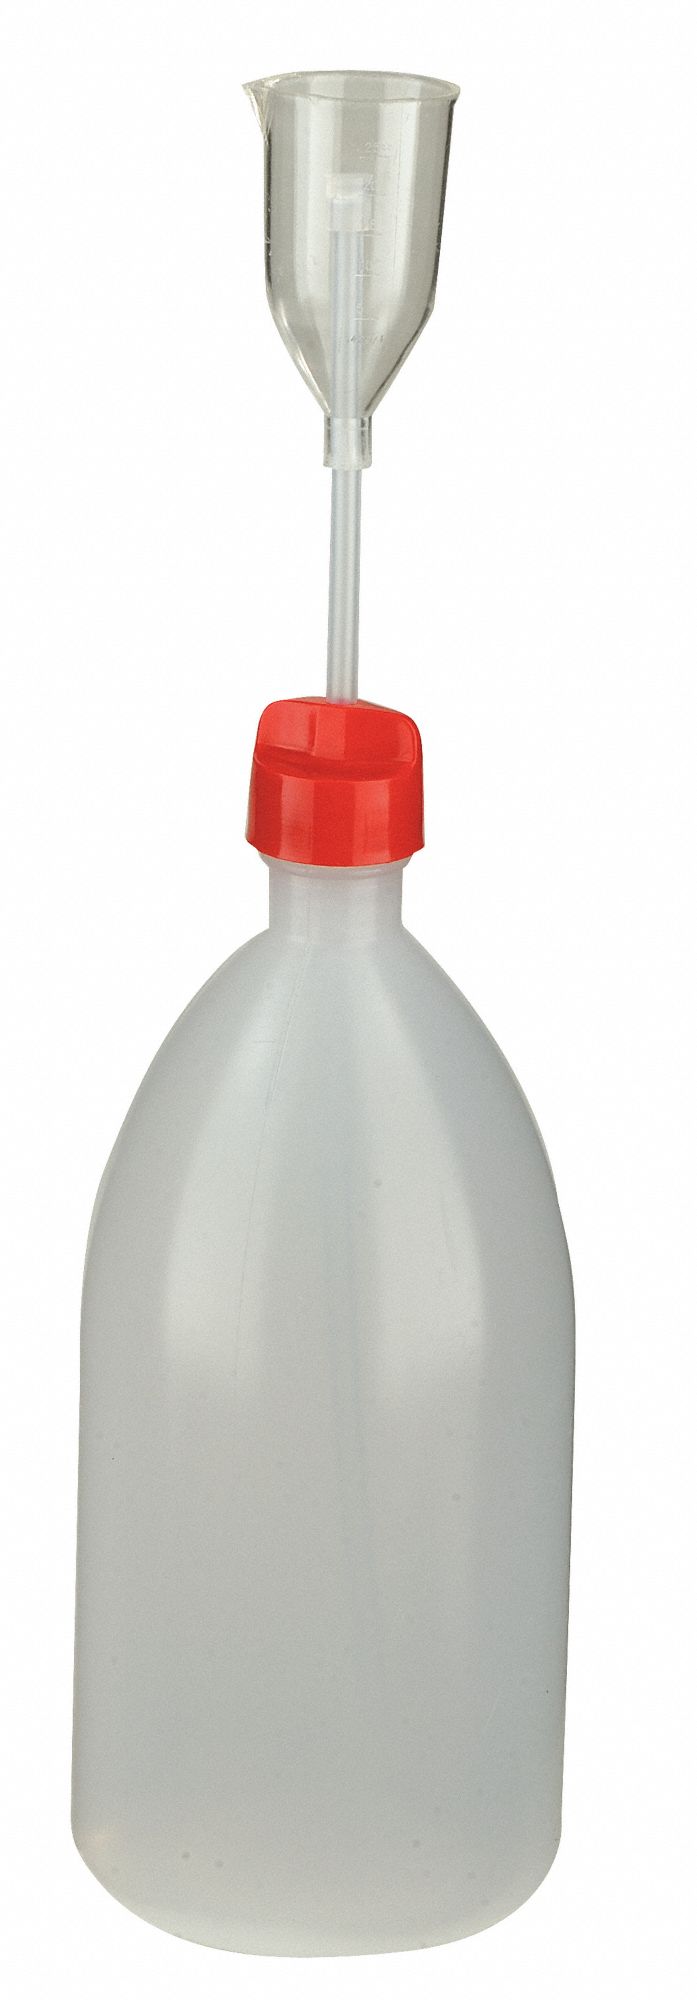 1,000mL Dispensing Bottle, Narrow Mouth, Low Density Polyethylene, PK 10